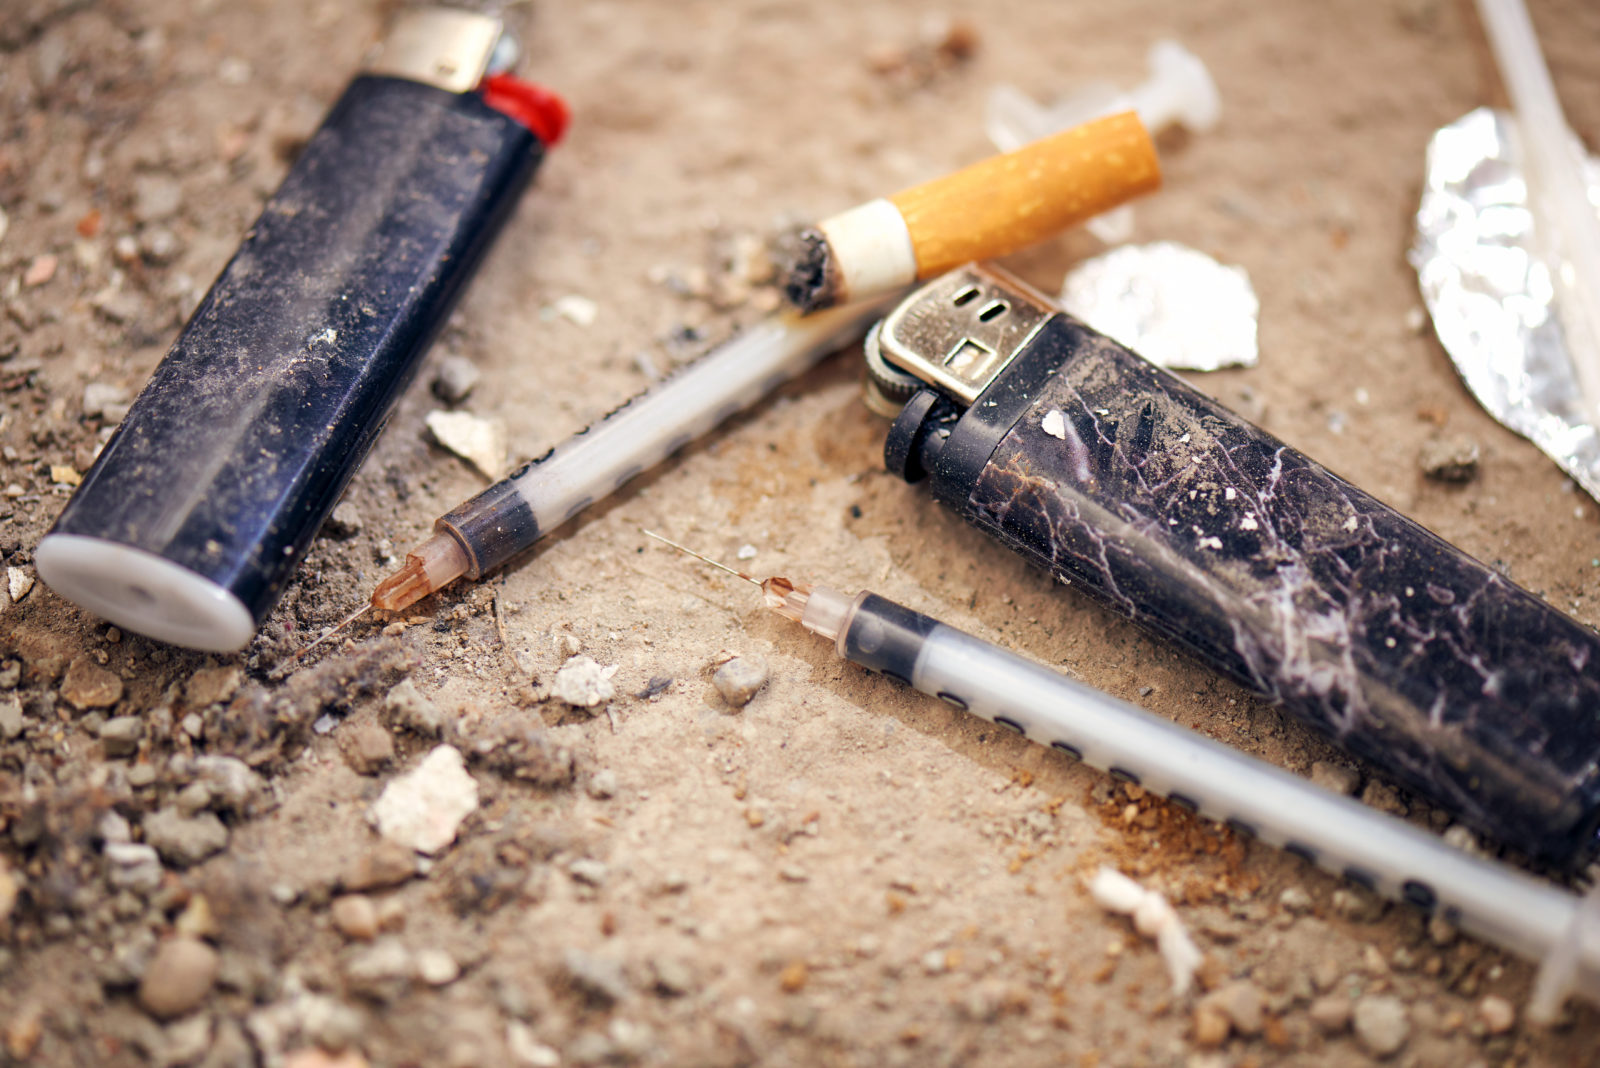 Used syringe on the ground - drugs Addiction equipment. Heroin, syringe, cigarette and lighter - drug addiction concept